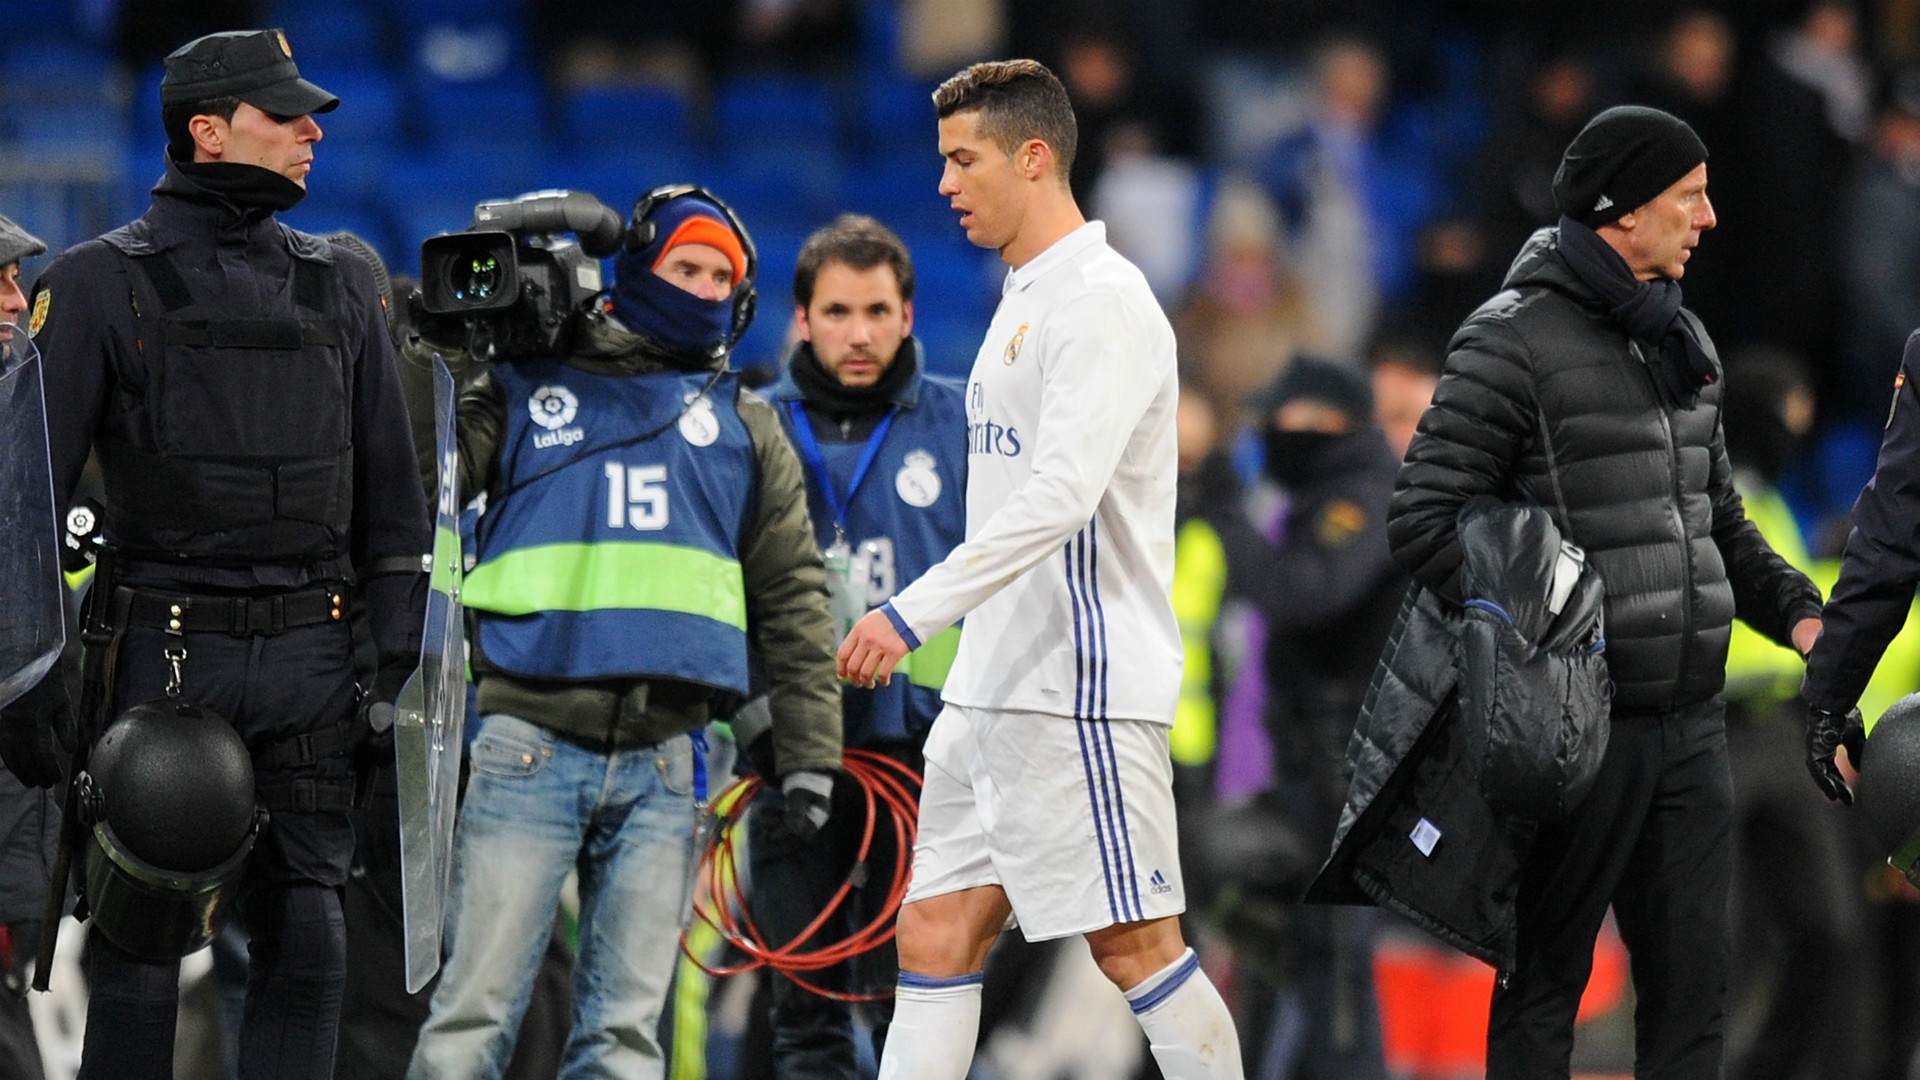 'I played worse sometimes' - Zidane defends Ronaldo from critics